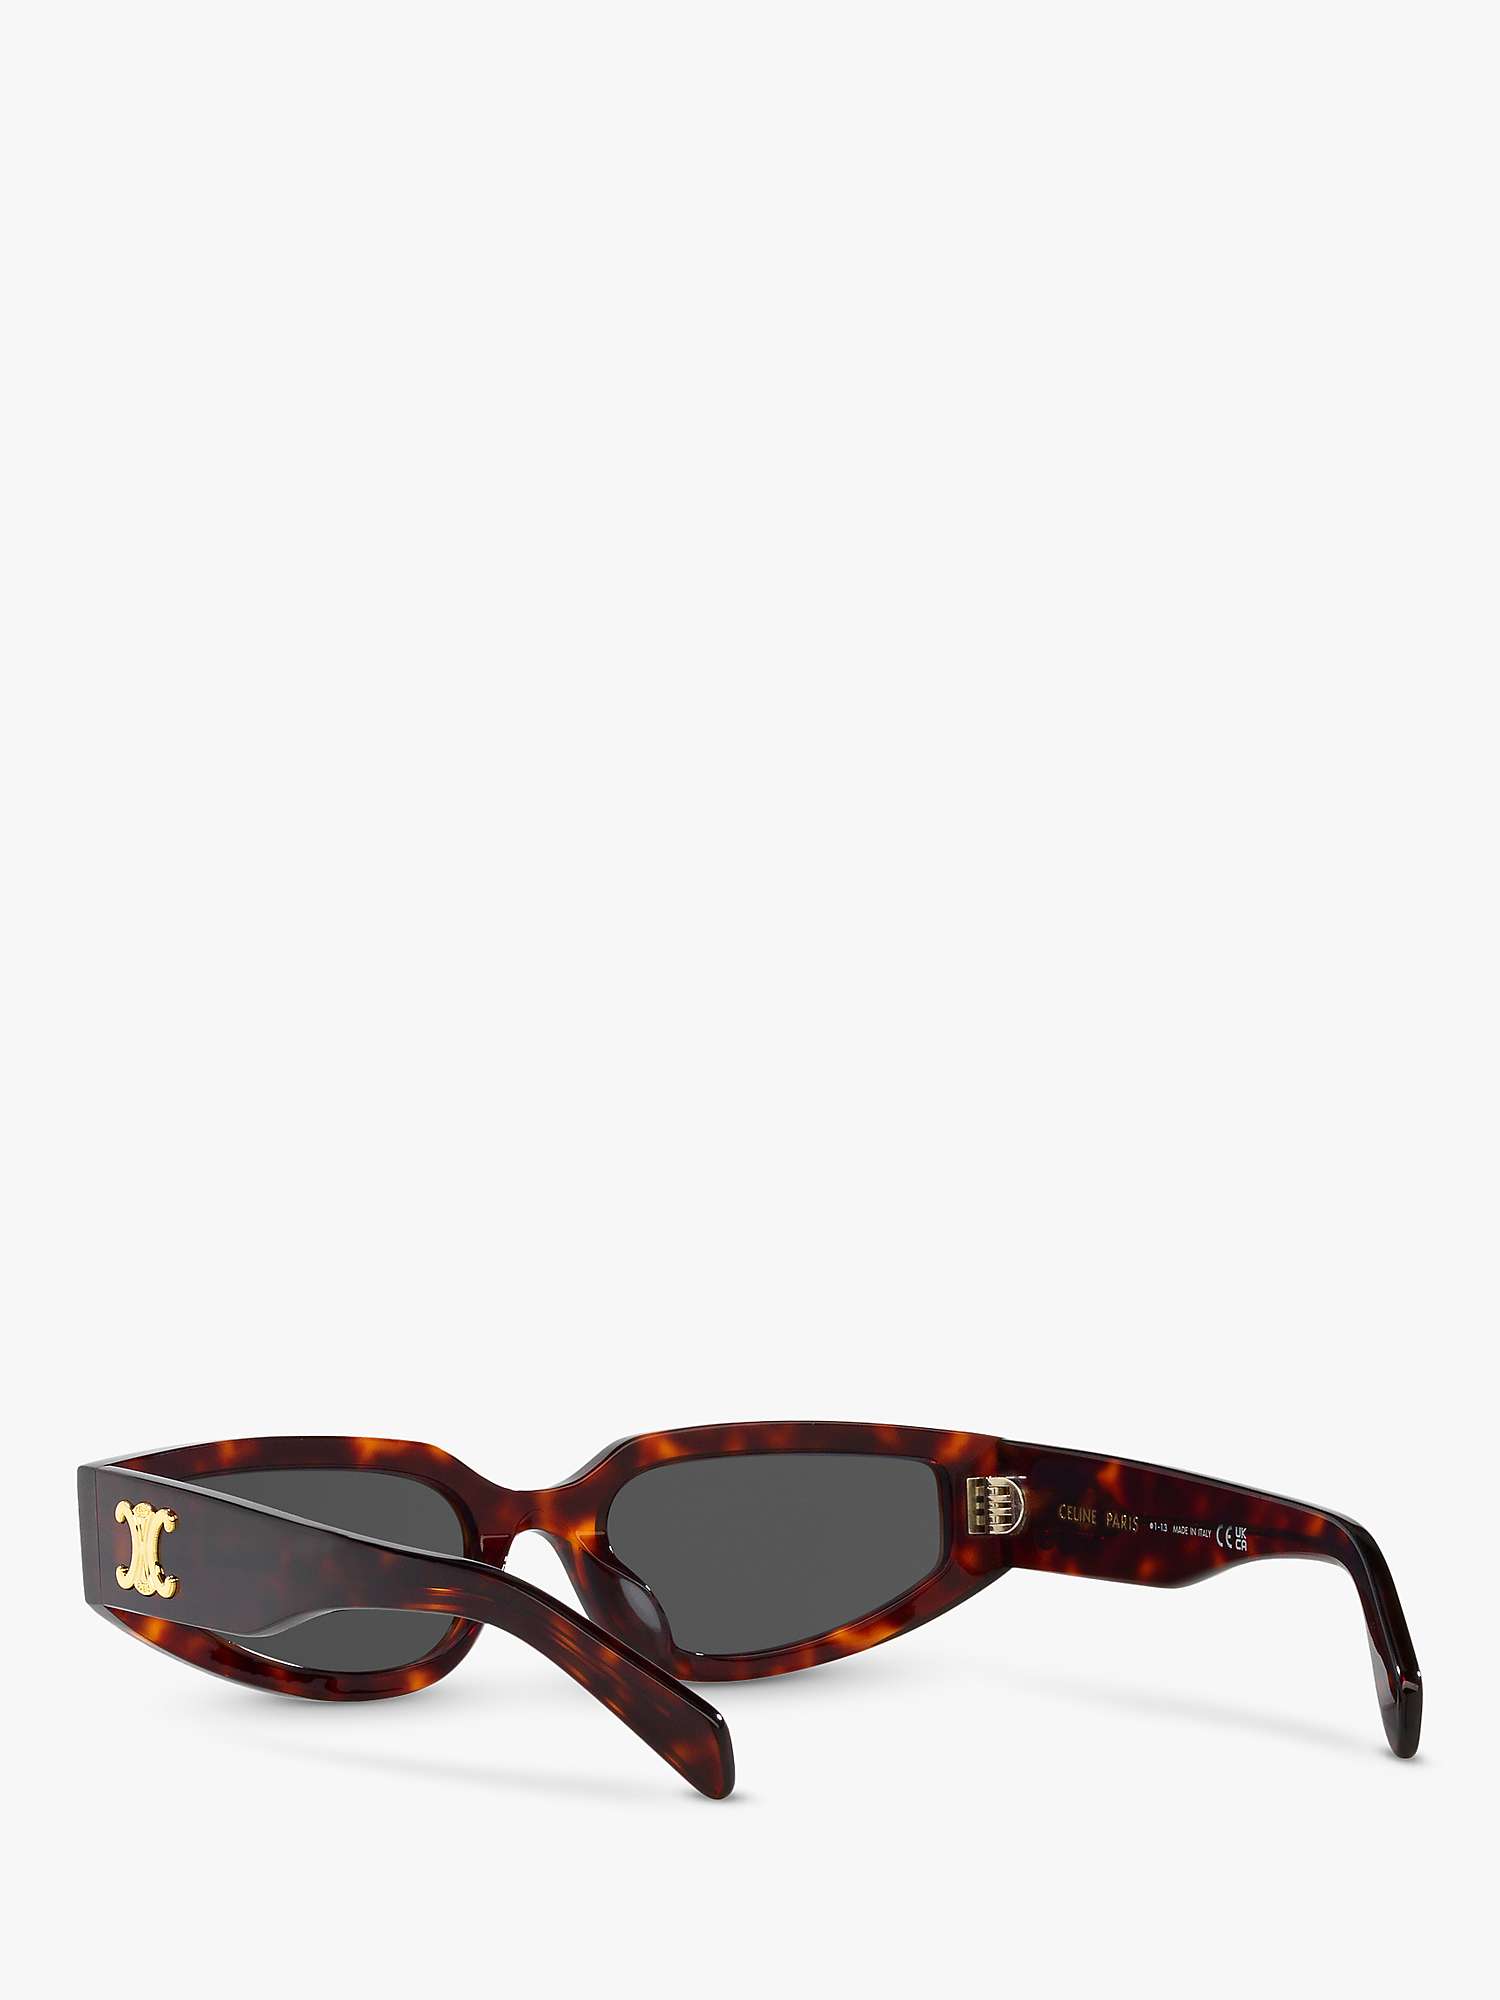 Buy Celine CL000413 Women's Triomphe Rectangle Sunglasses, Tortoiseshell/Grey Online at johnlewis.com